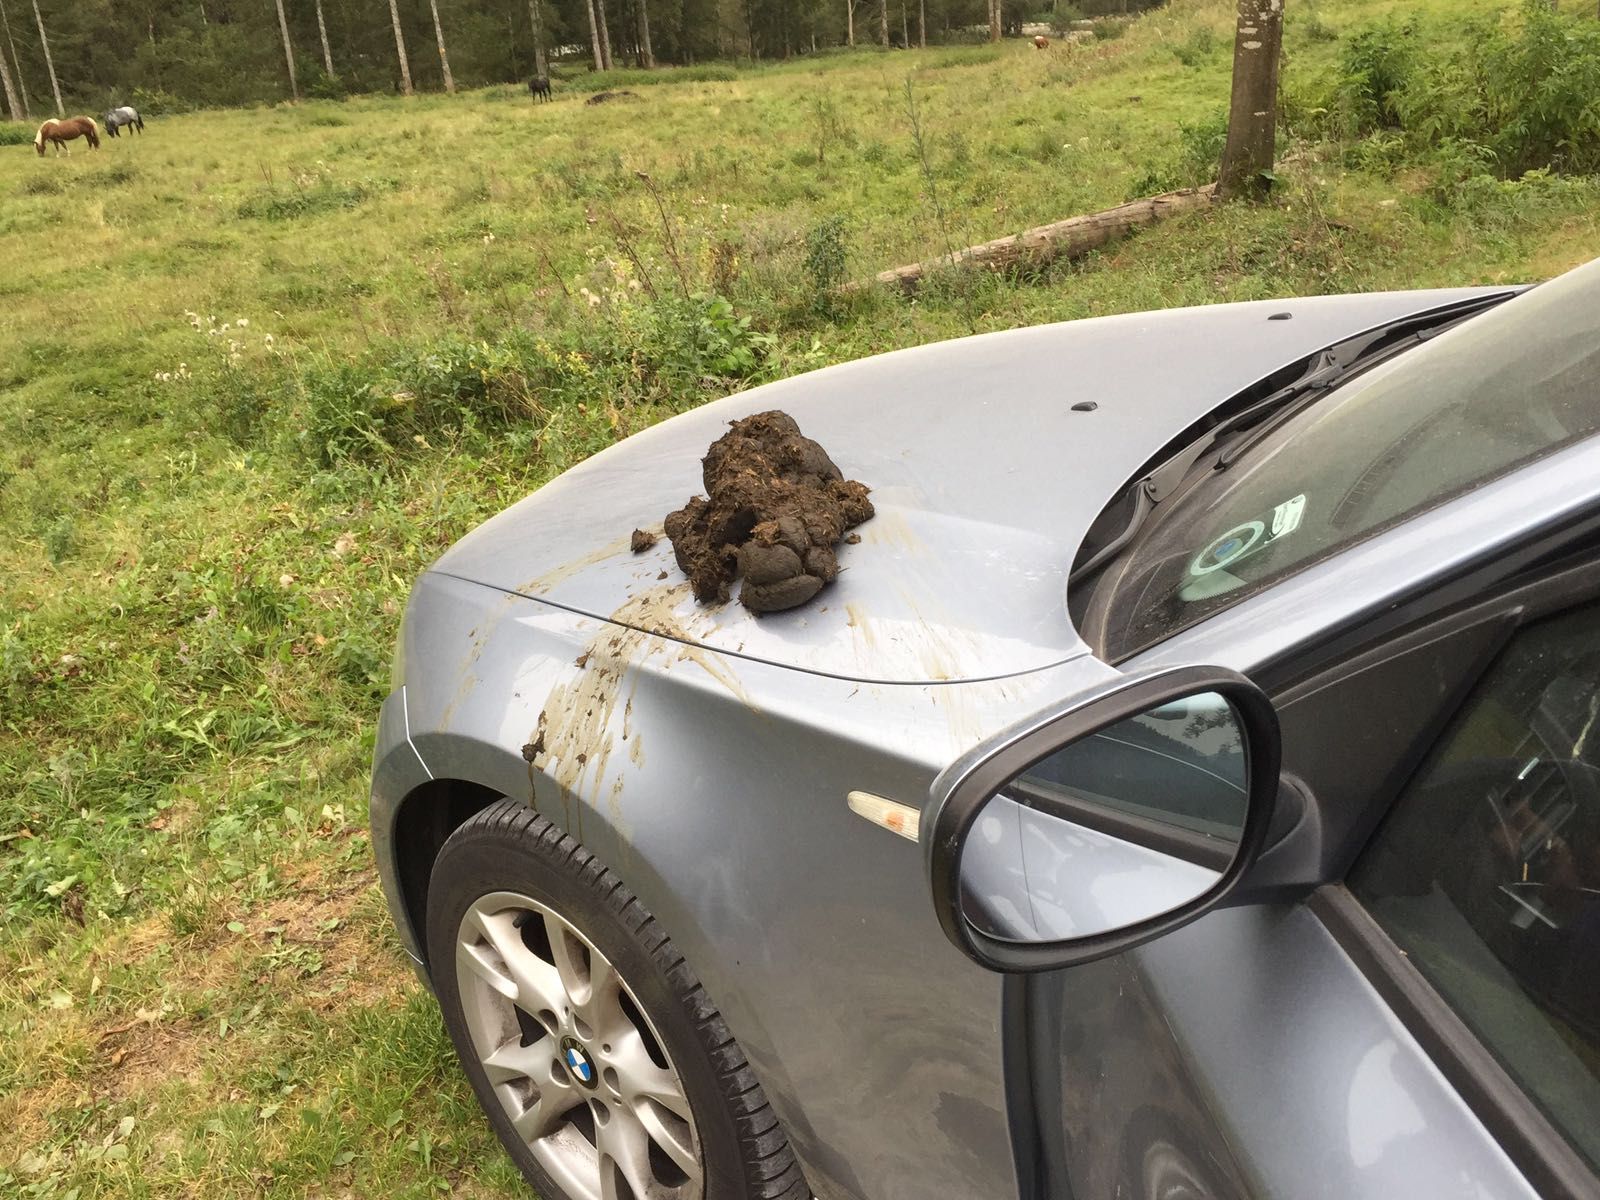 A horse took a dump on my Girlfriend's car.